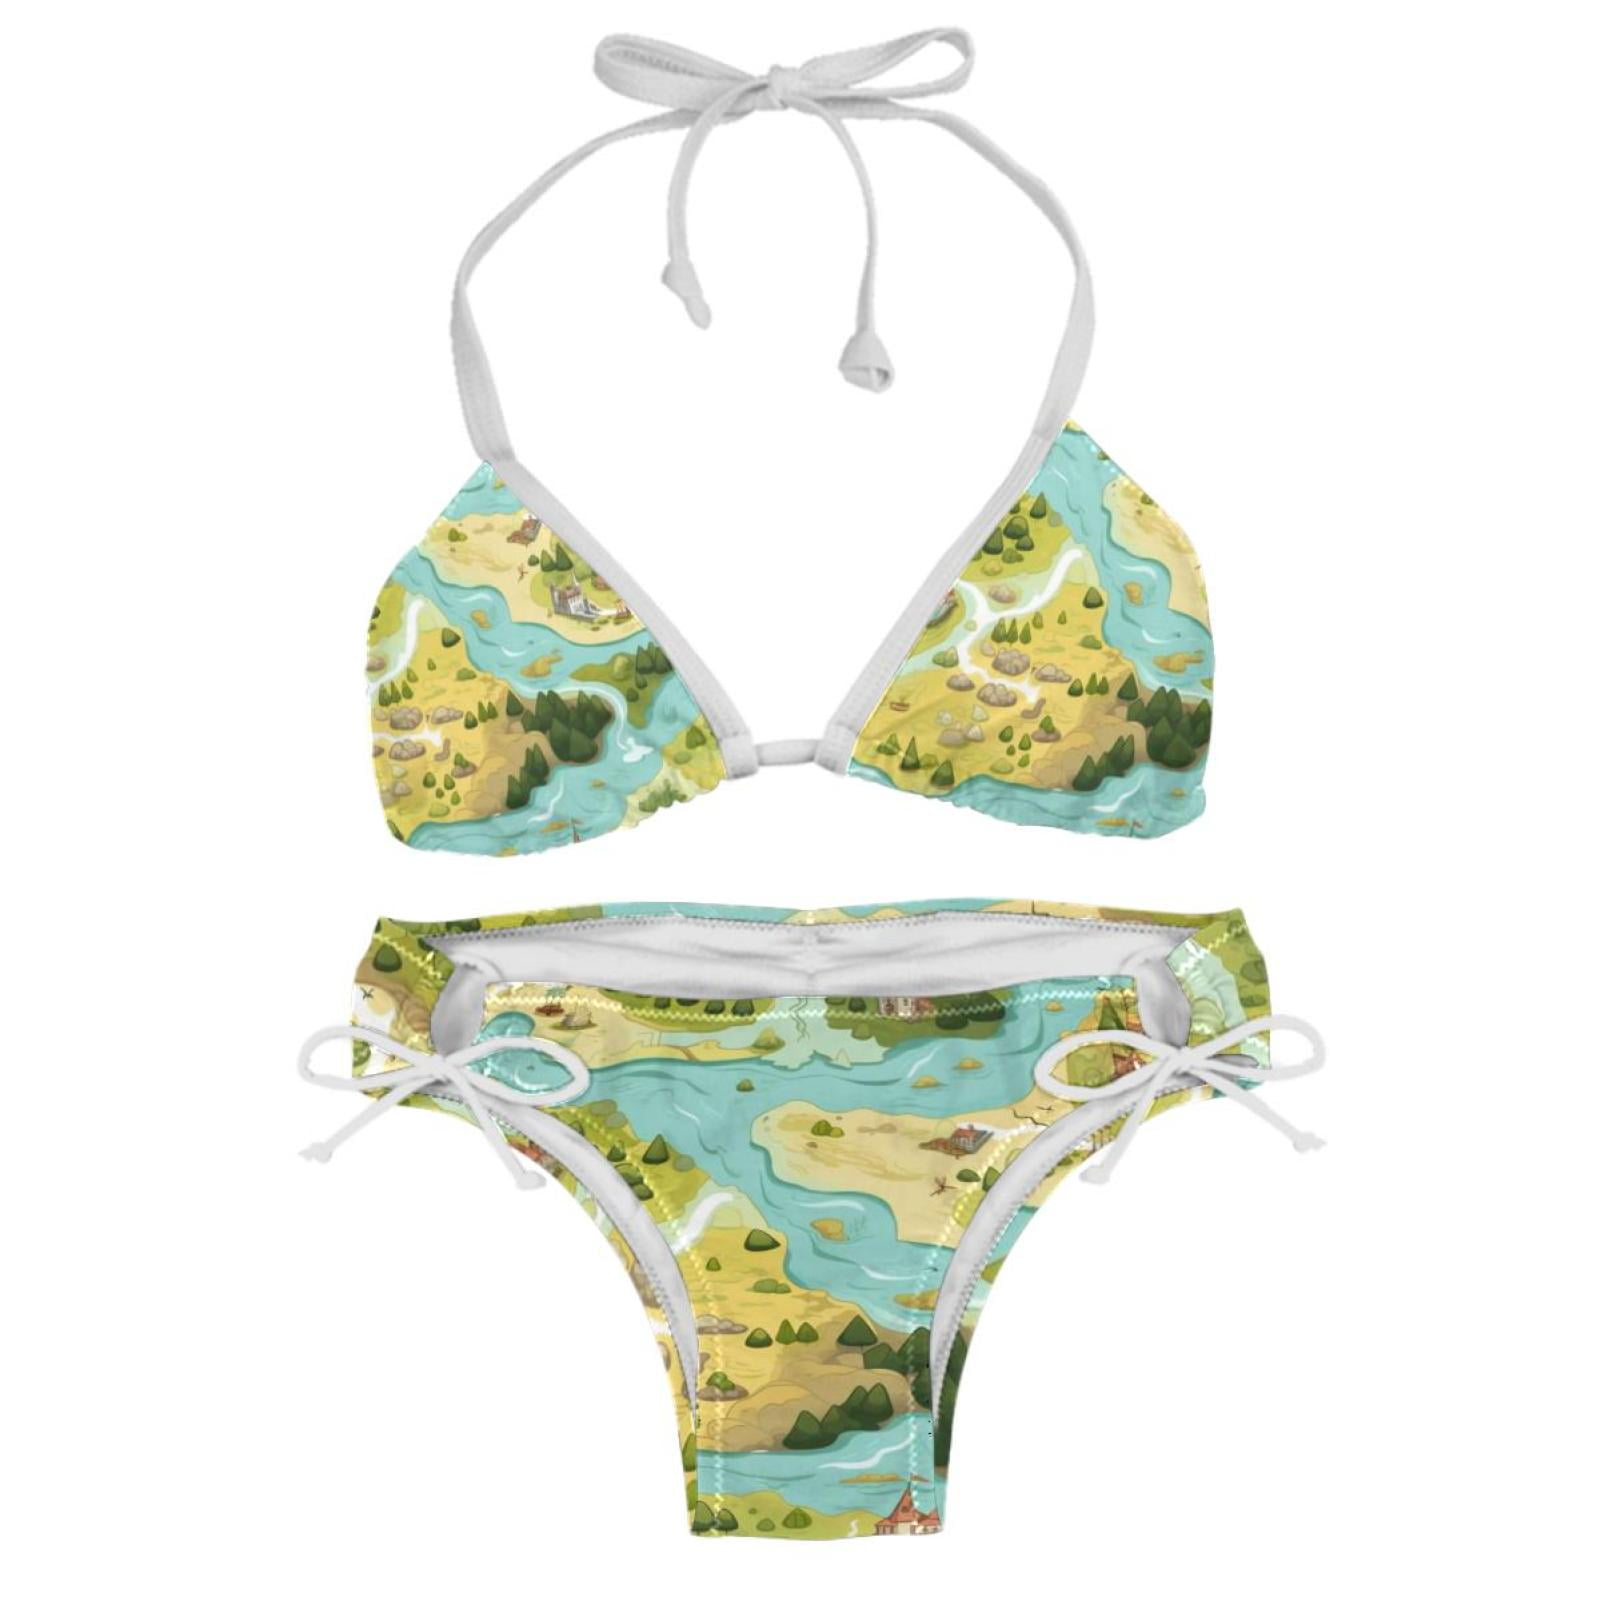 Atlas Women's Swim Suit Bikini Set 2-Pack with Detachable Sponge and ...